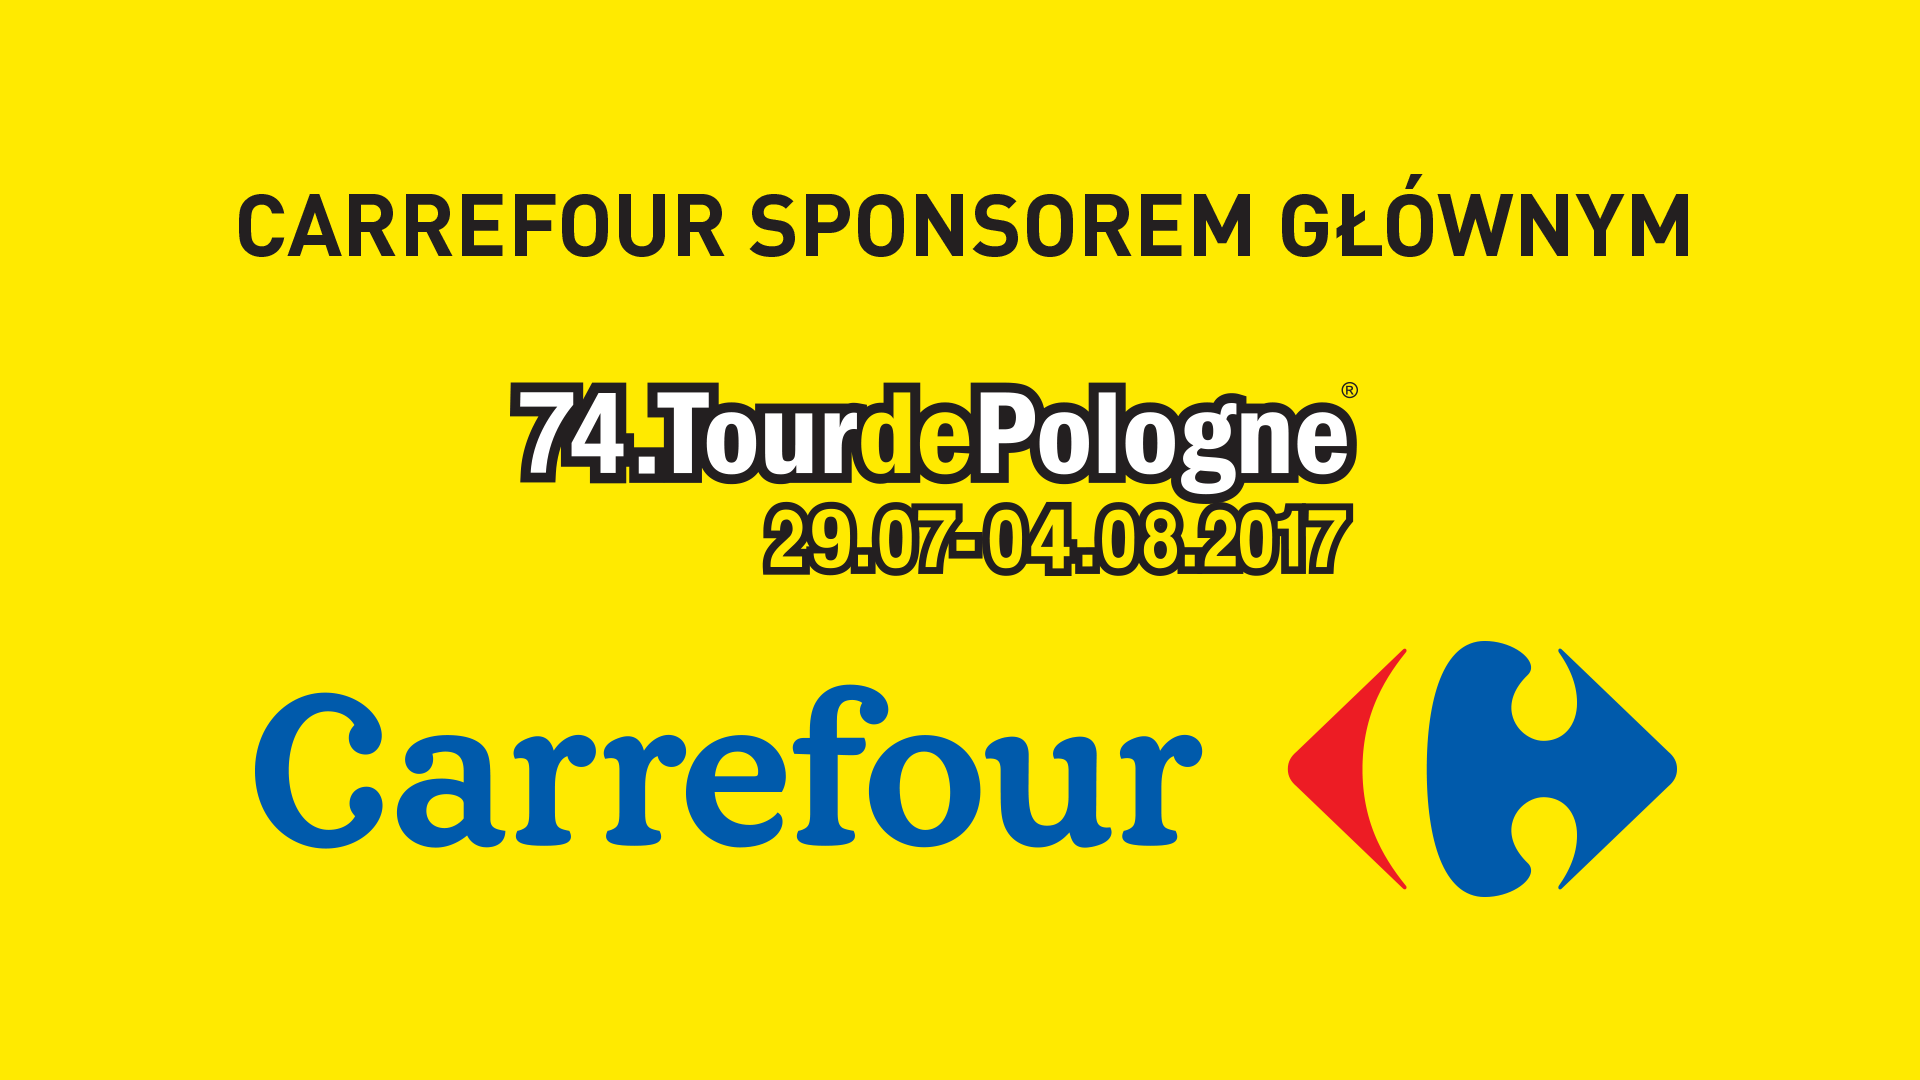 Carrefour Polska sponsorem głównym 74. Tour de Pologne